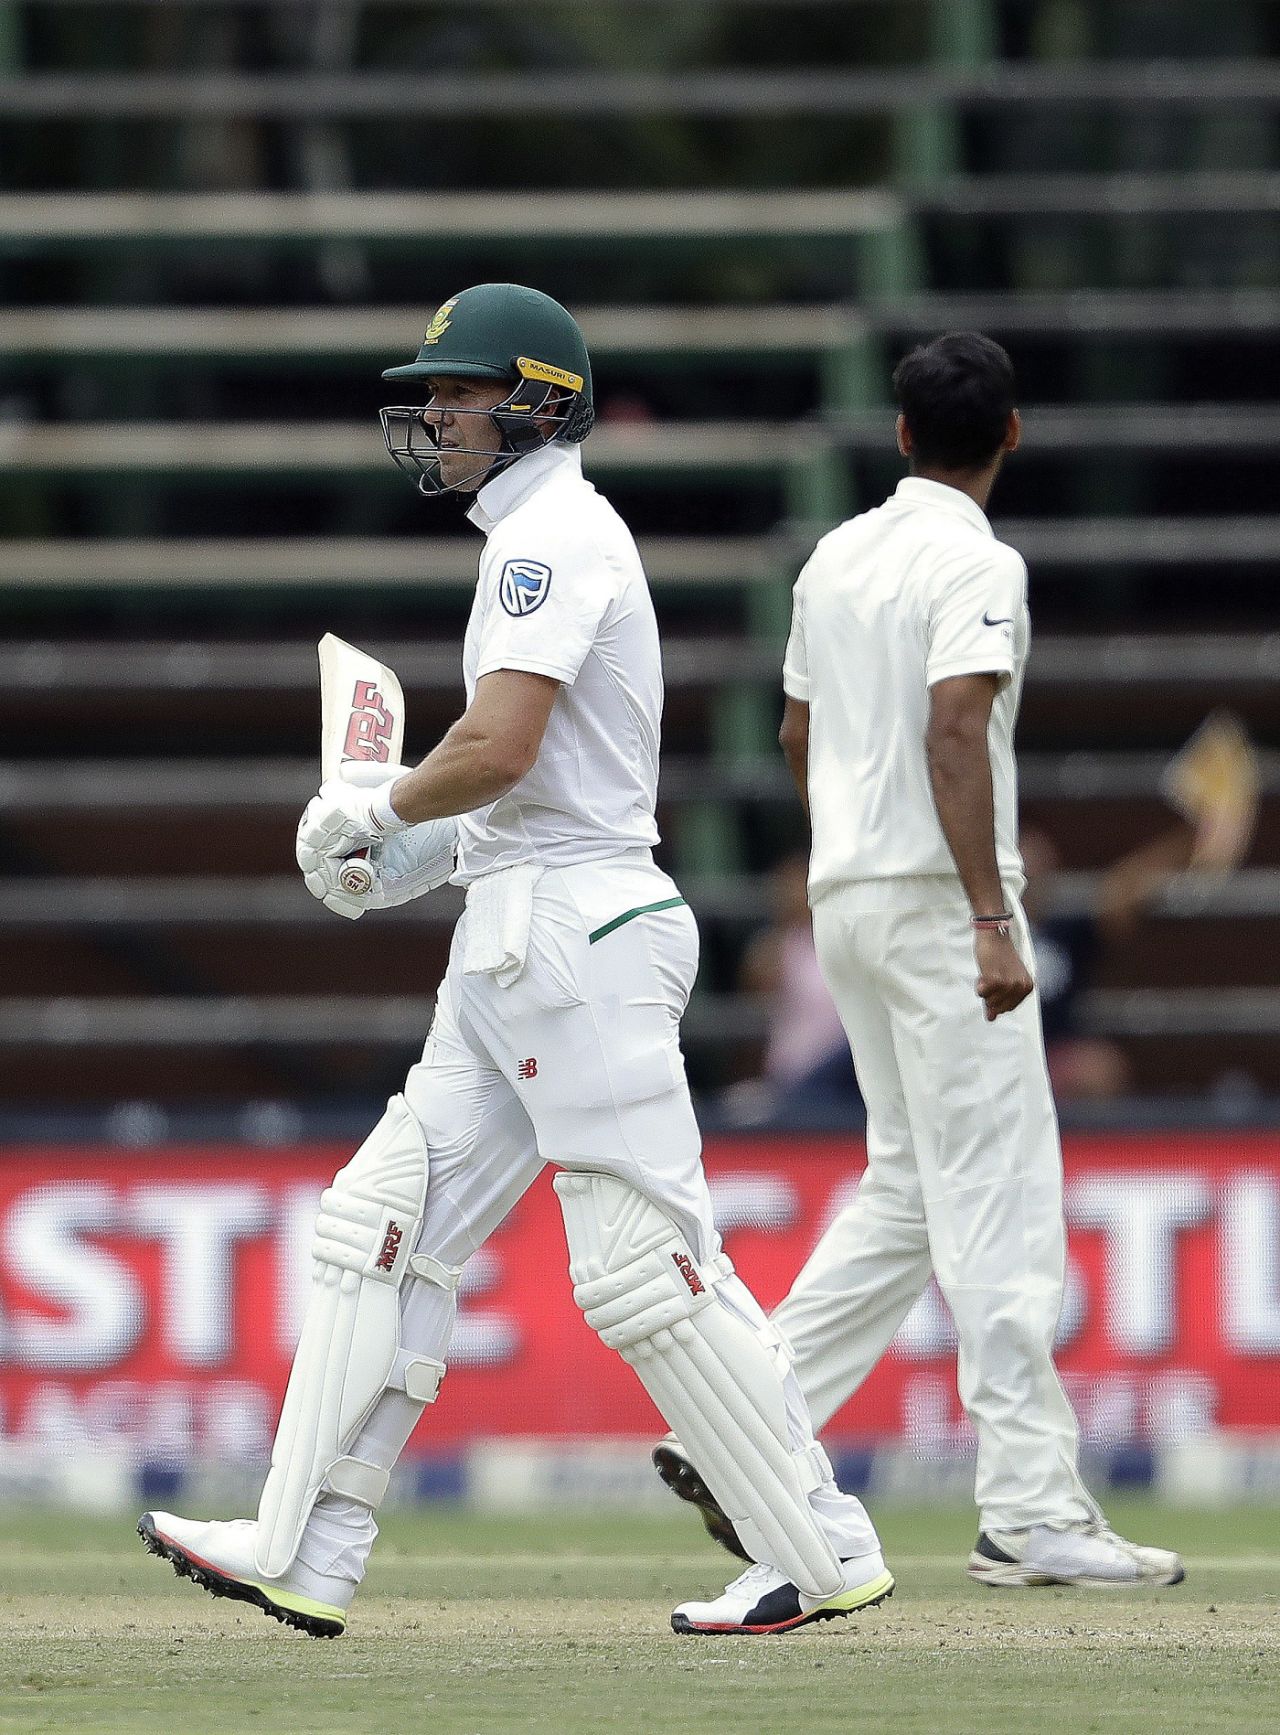 AB de Villiers walks back after being dismissed, South Africa v India, 3rd Test, Johannesburg, 2nd day, January 25, 2018